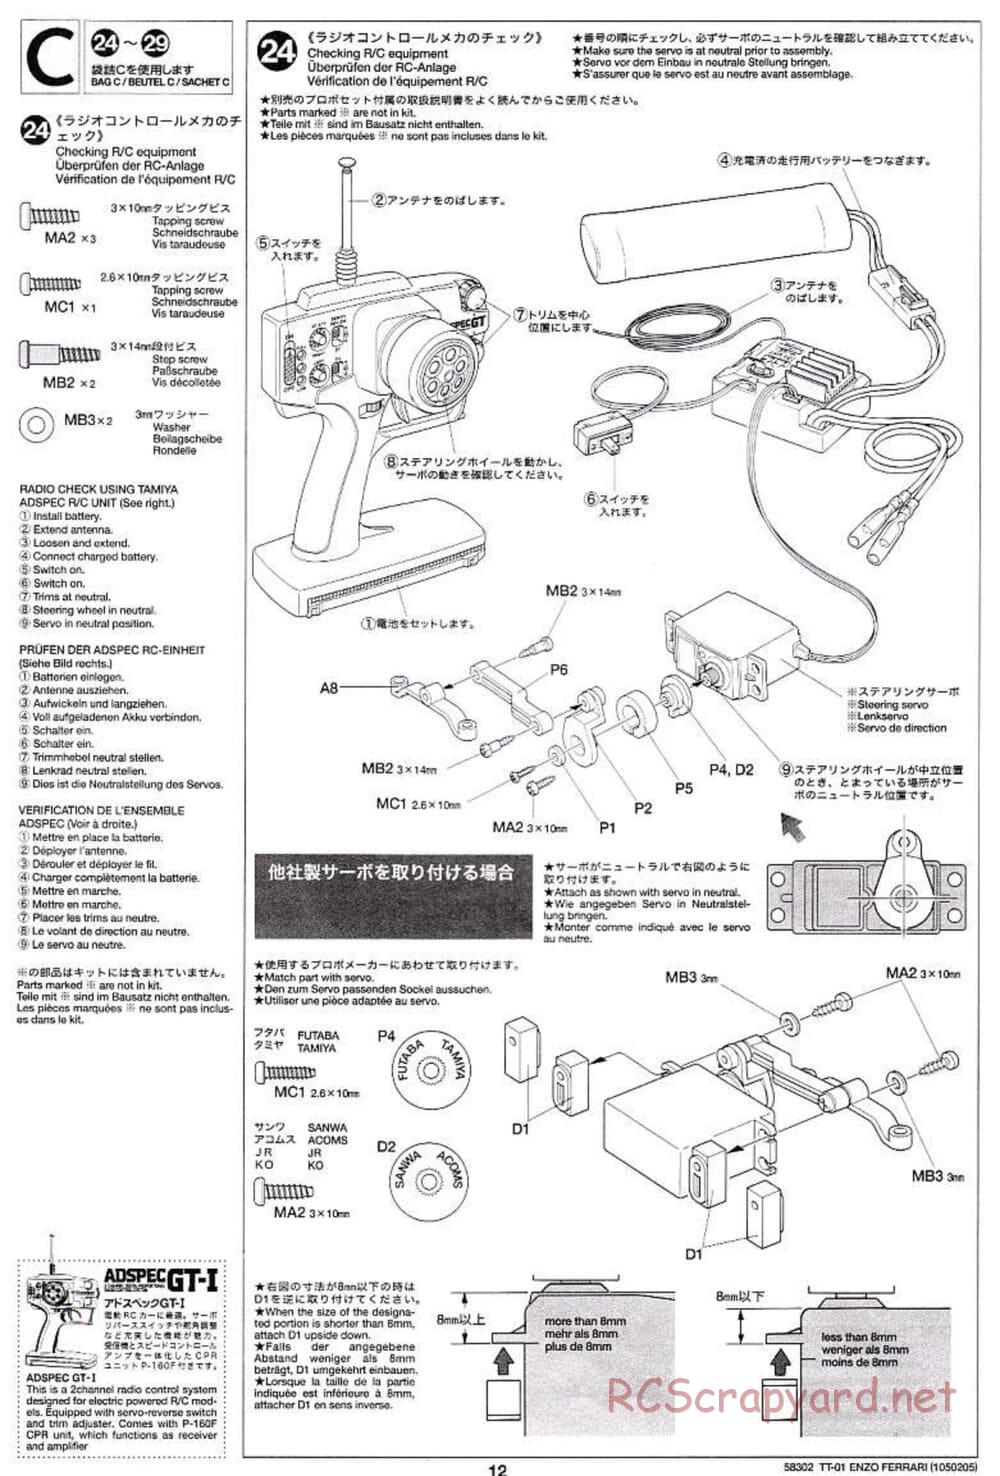 Tamiya - Enzo Ferrari - TT-01 Chassis - Manual - Page 12